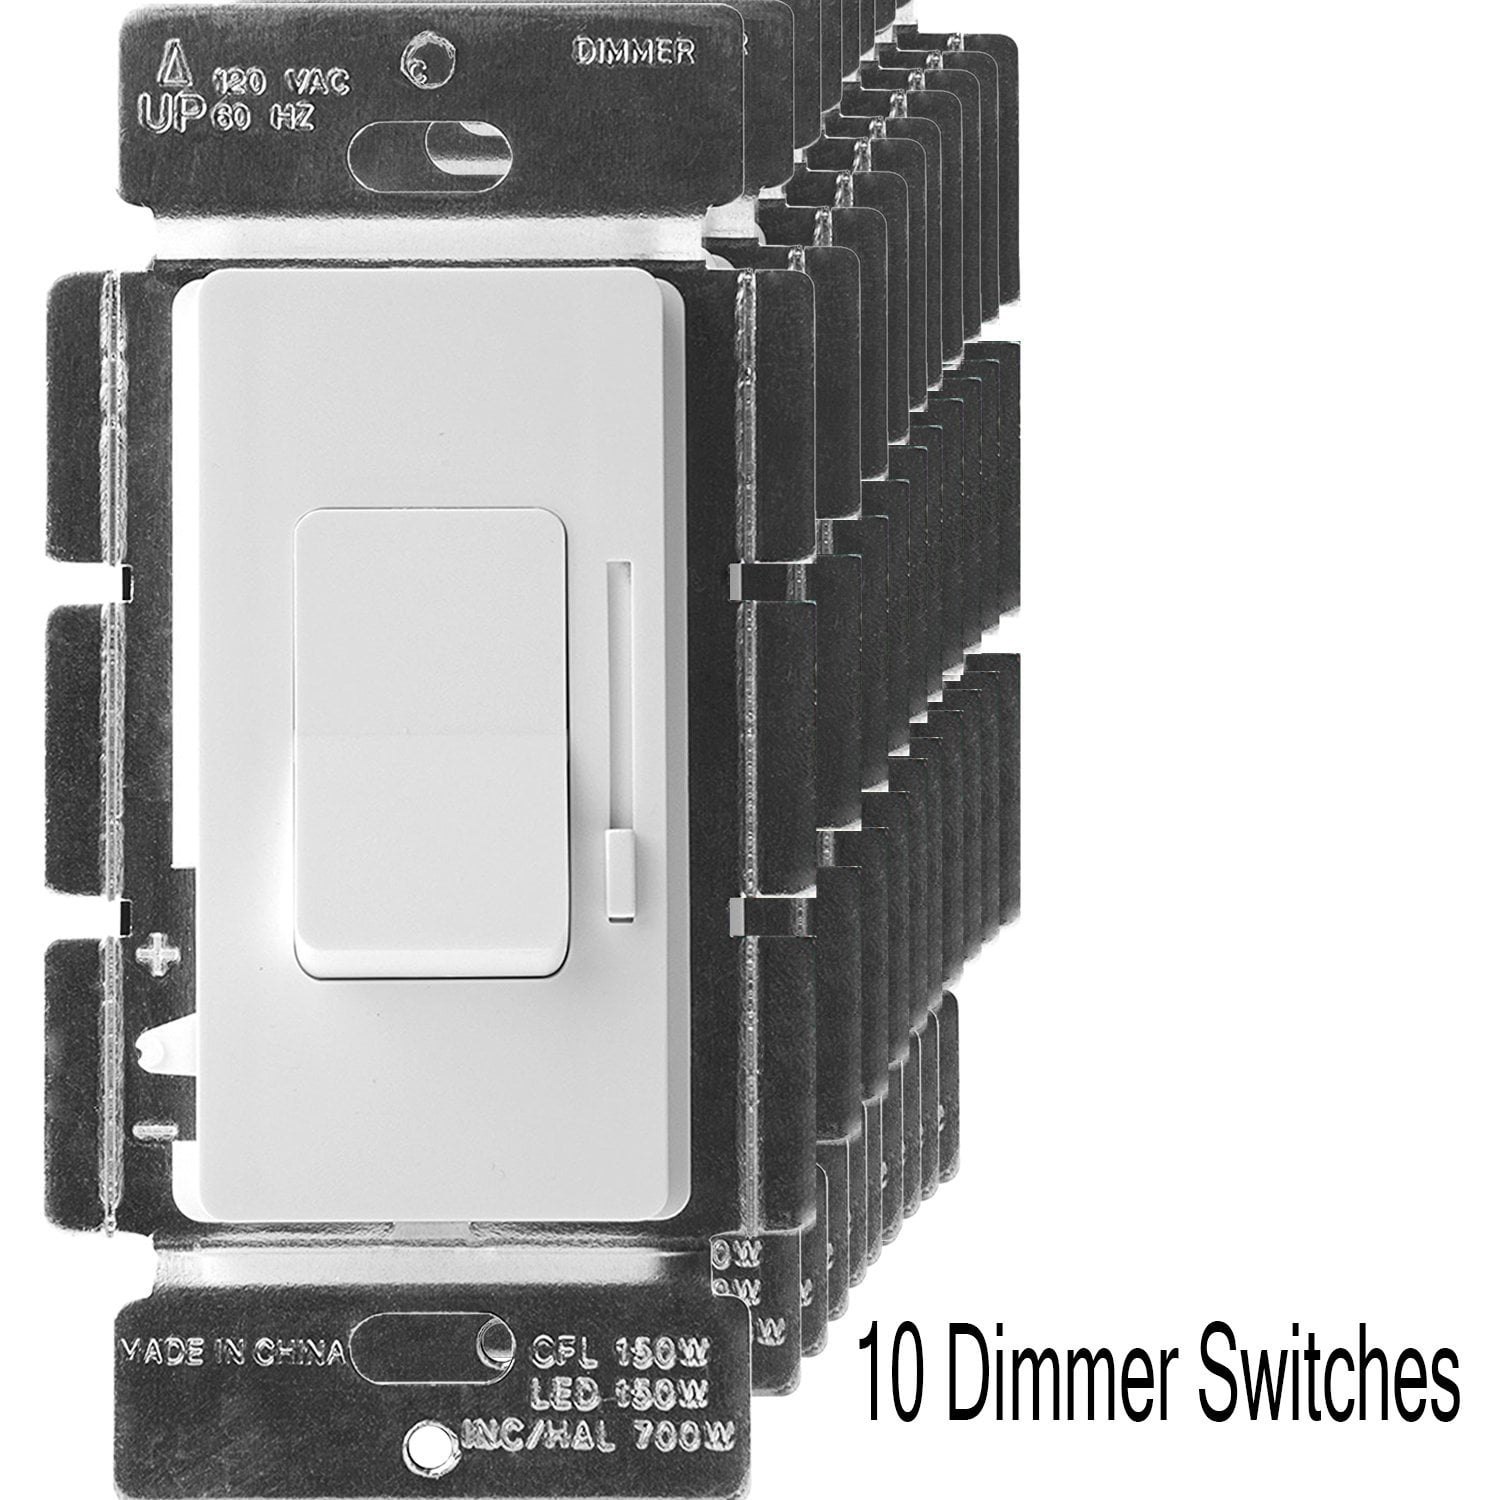 Enerlites 3-Way Universal Dimmer Switch for 150 Watt Dimmable LED 700W Incandescent Halogen, 10 Pack - Walmart.com